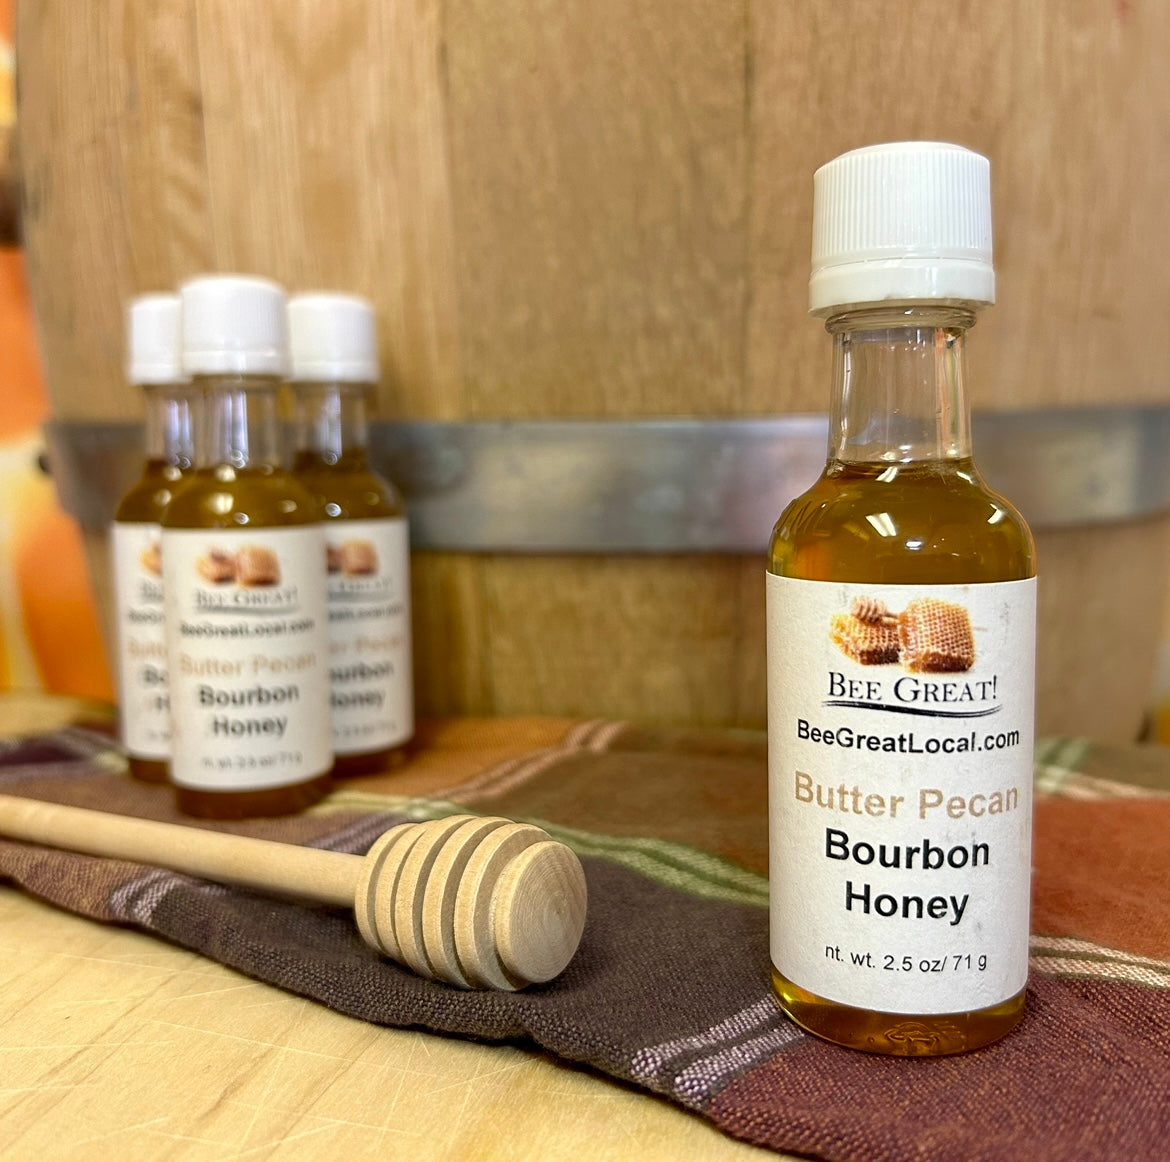 Fruit and Bourbon Honeys